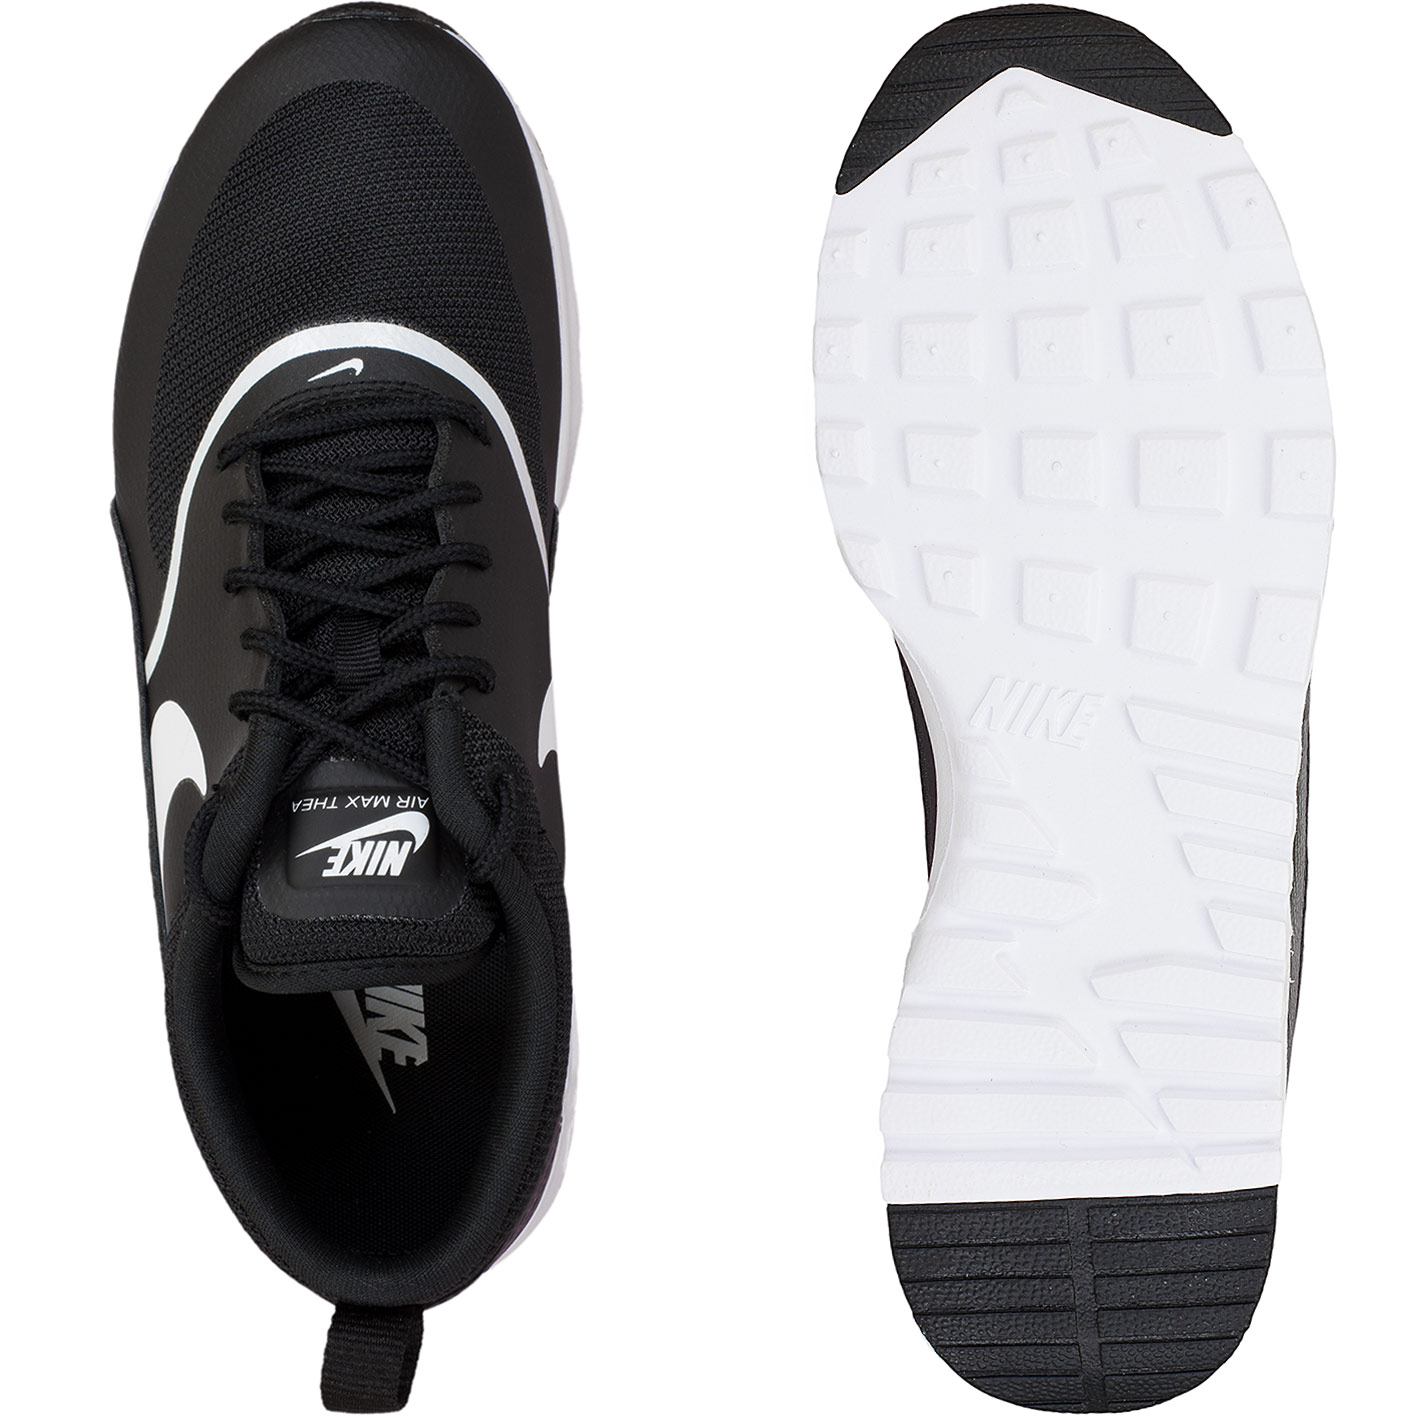 ☆ Nike Damen Sneaker Air Max Thea schwarz/weiß hier bestellen!